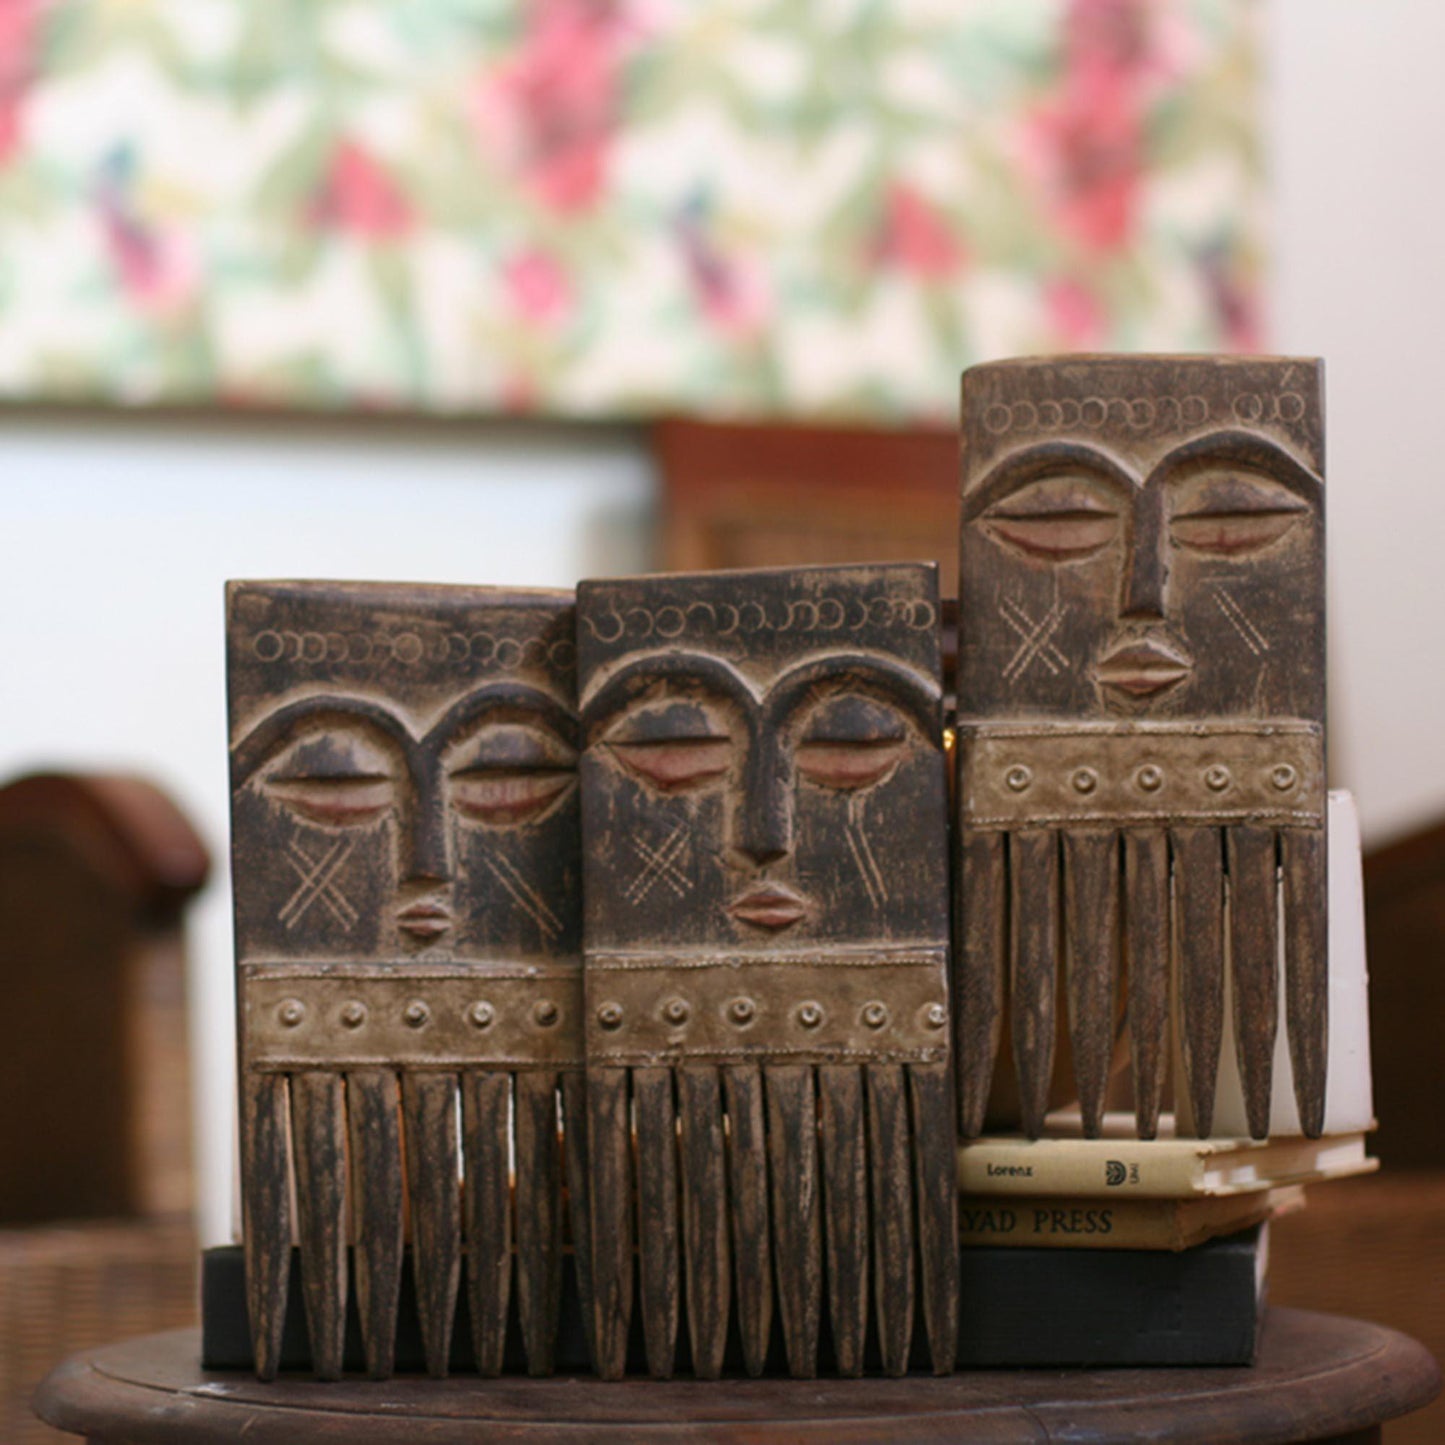 NOVICA - Ashanti Nyansa Hand Carved Wood Comb Sculptures - Set Of 3